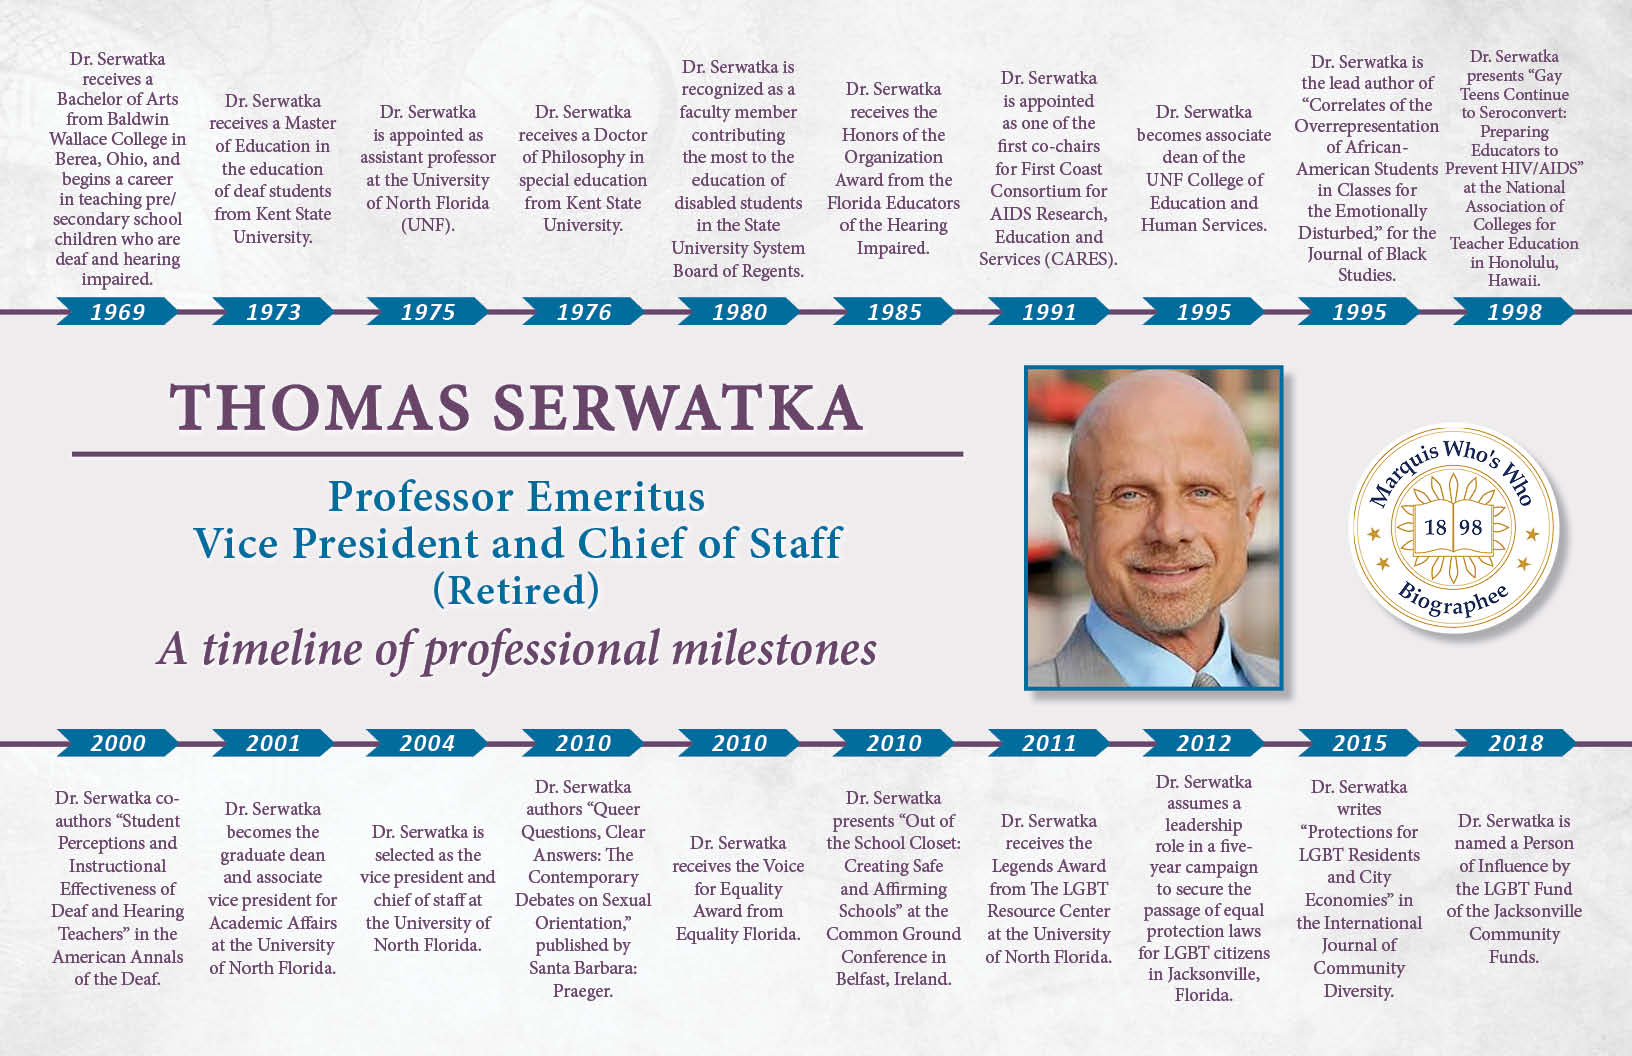 Thomas Serwatka Professional Milestones